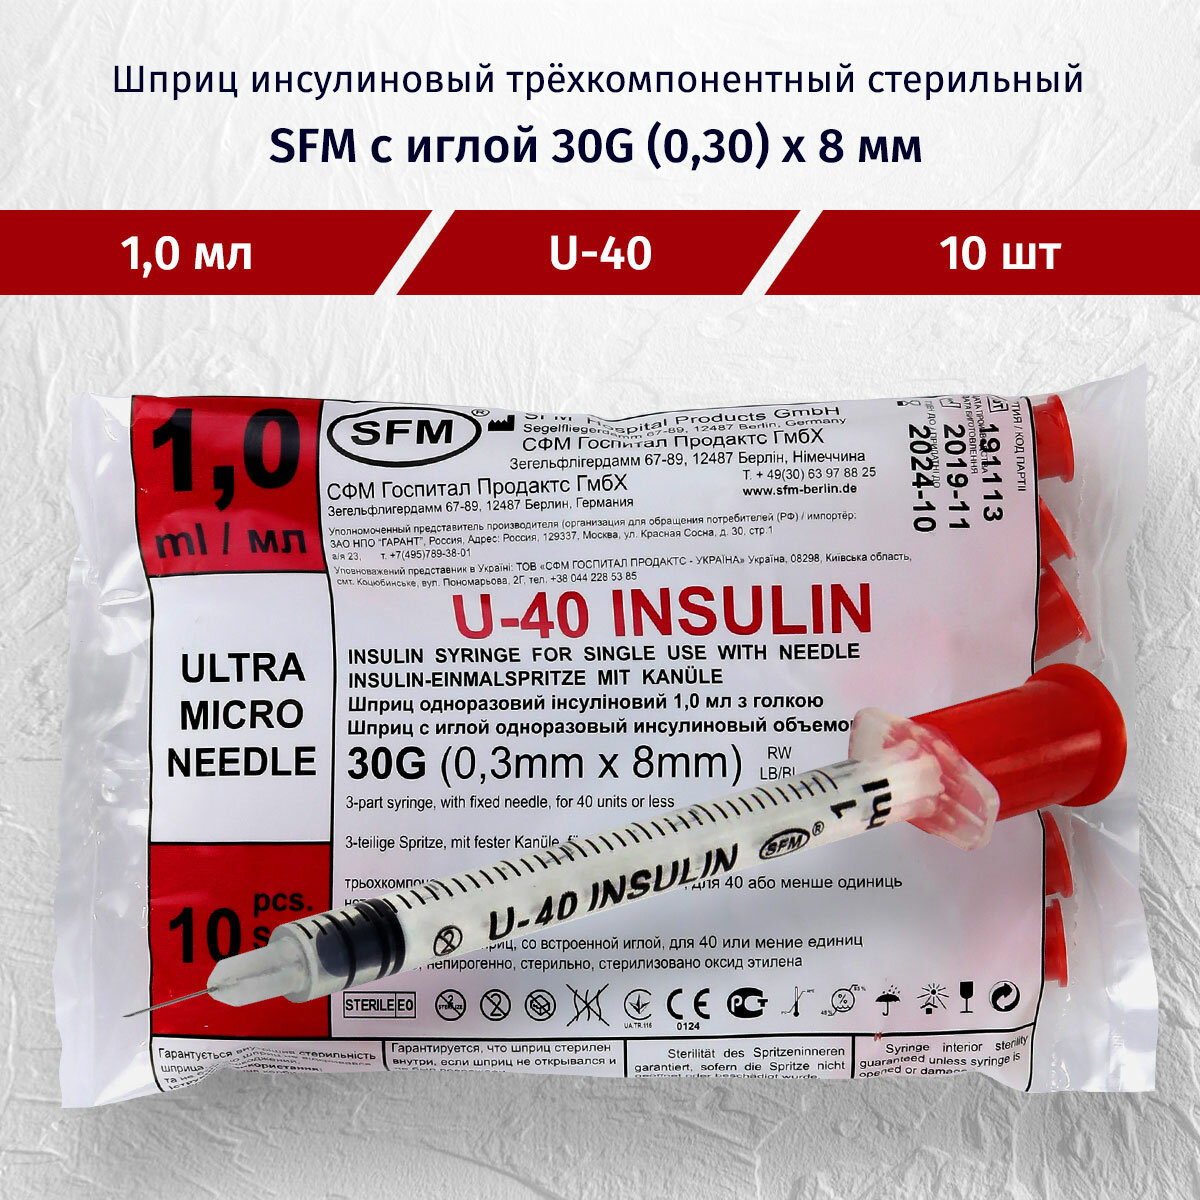 Шприц инсулиновый 1 мл. 30G, 0,30 x 8,0, 10 штук (SFM)